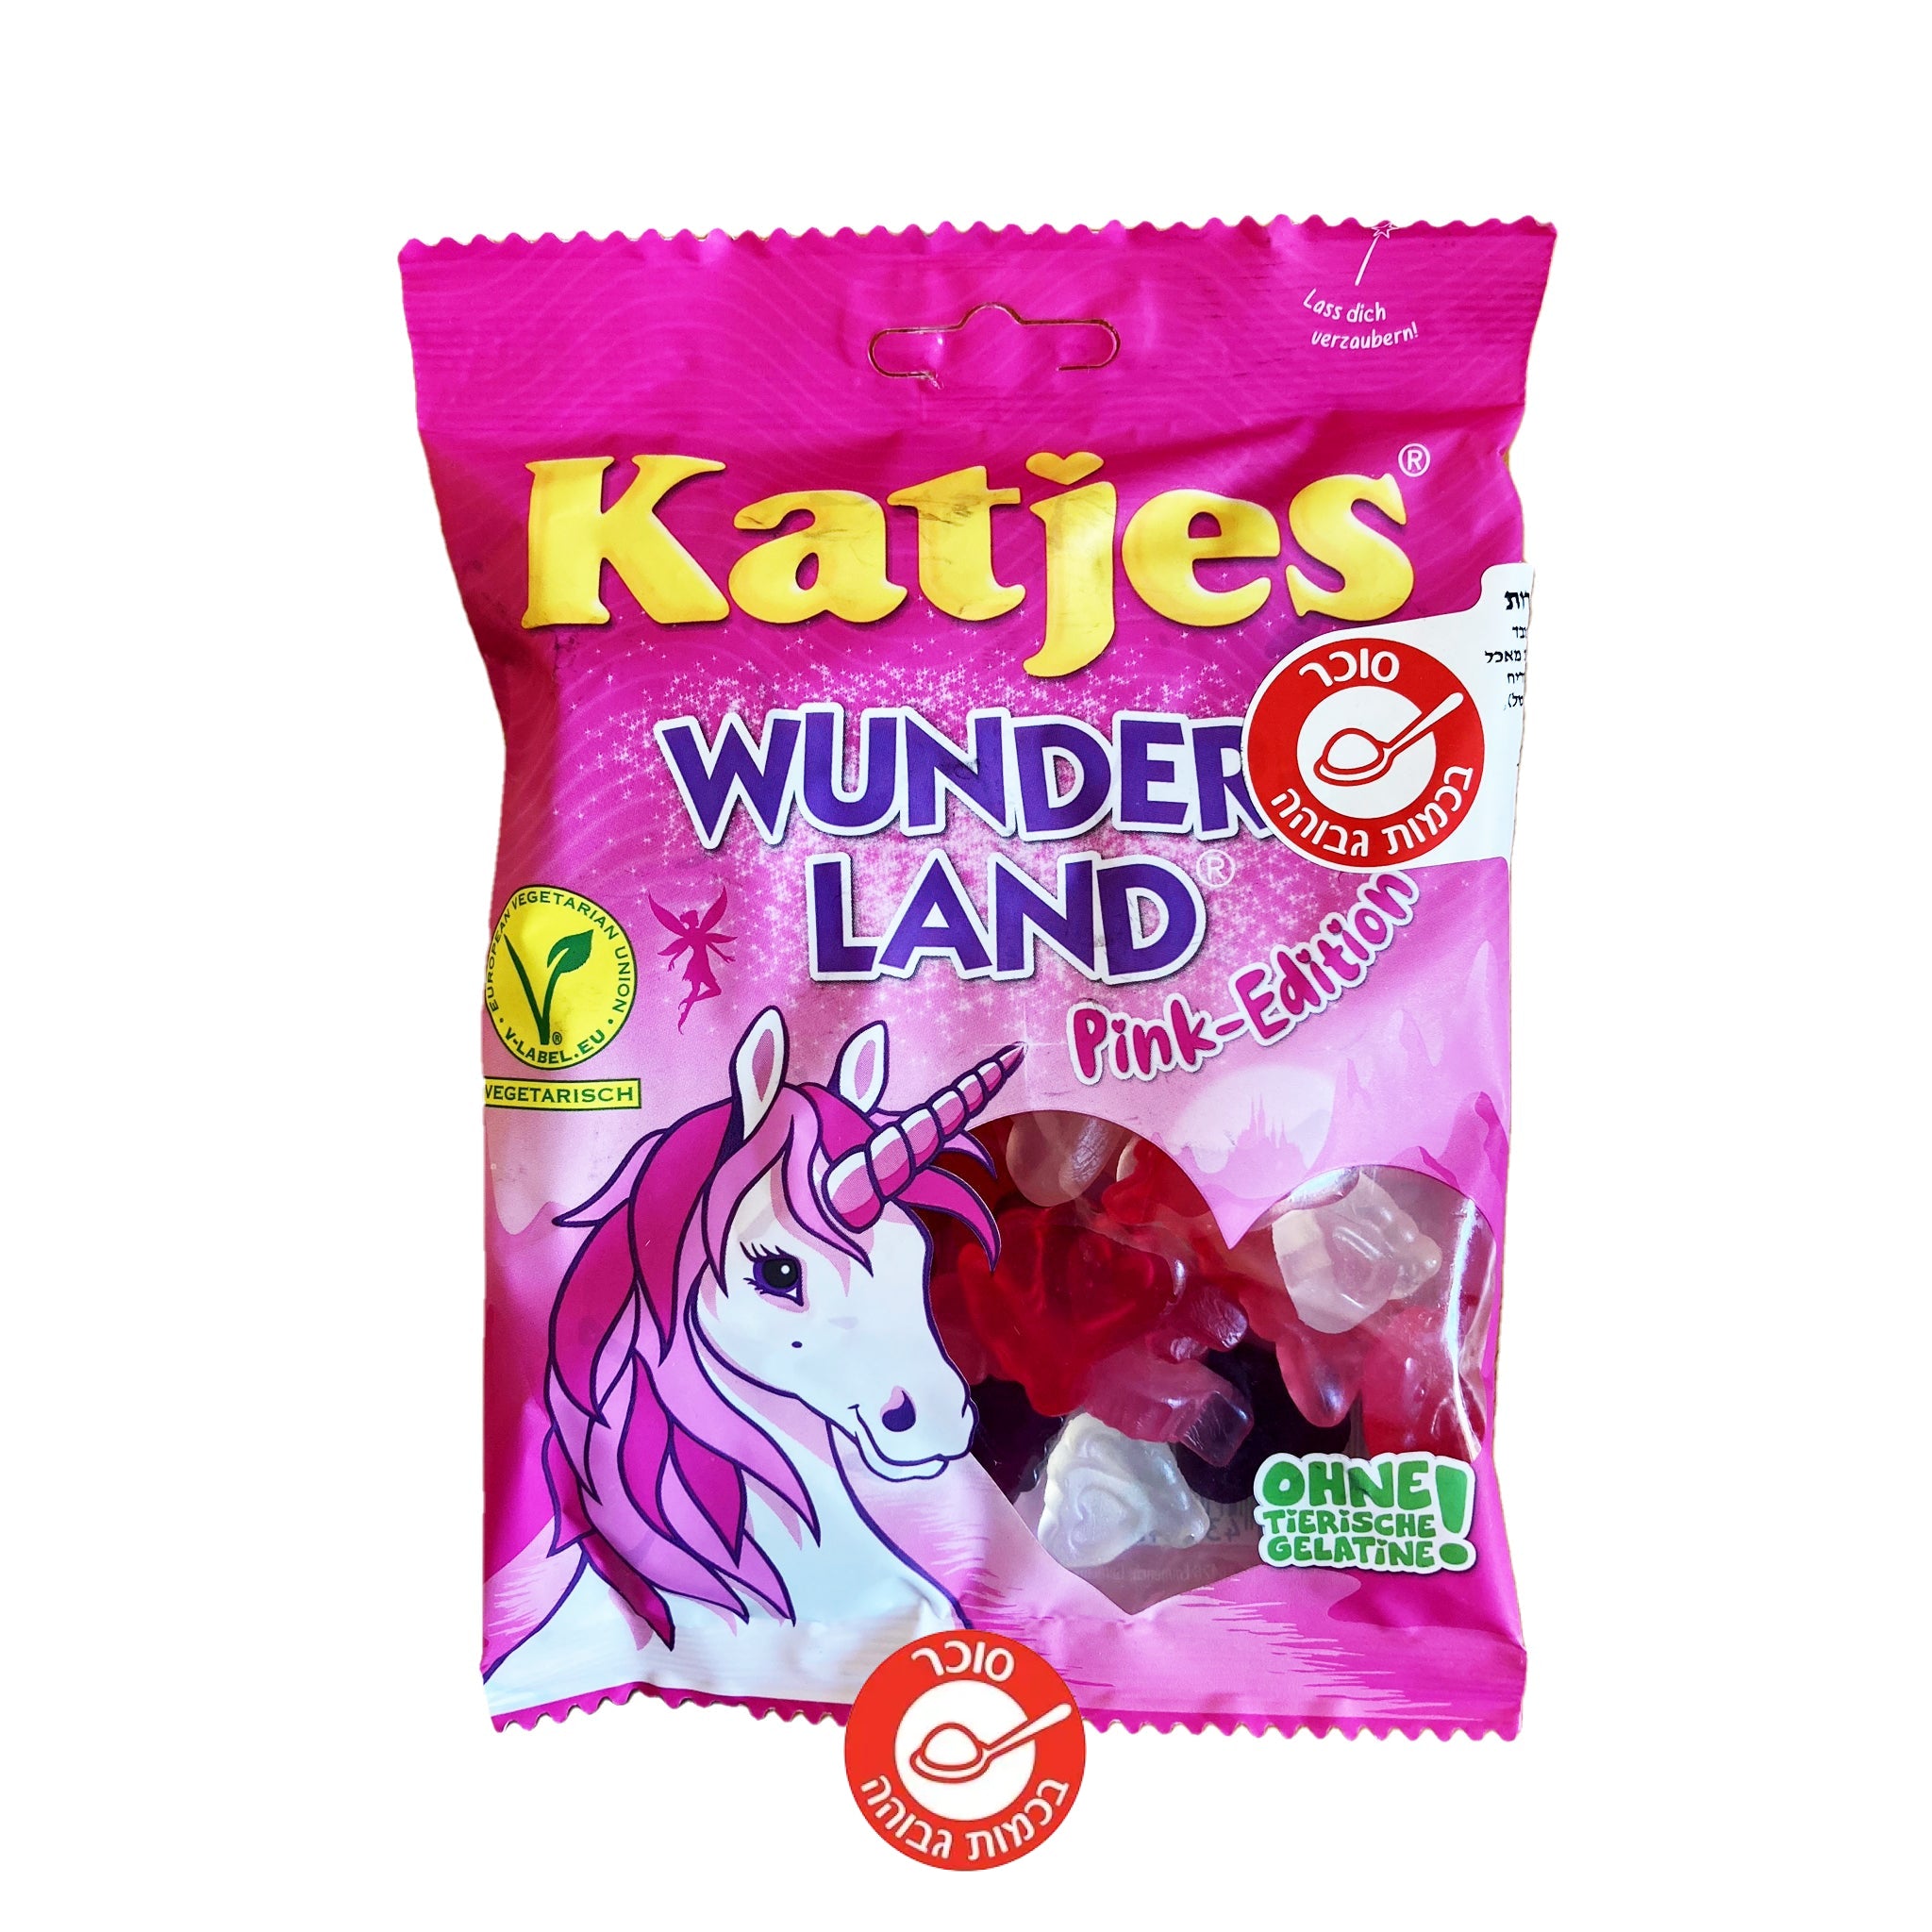 Katjes Wunder-Land Pink Edition סוכריות קטג'טס חד קרן טעימים